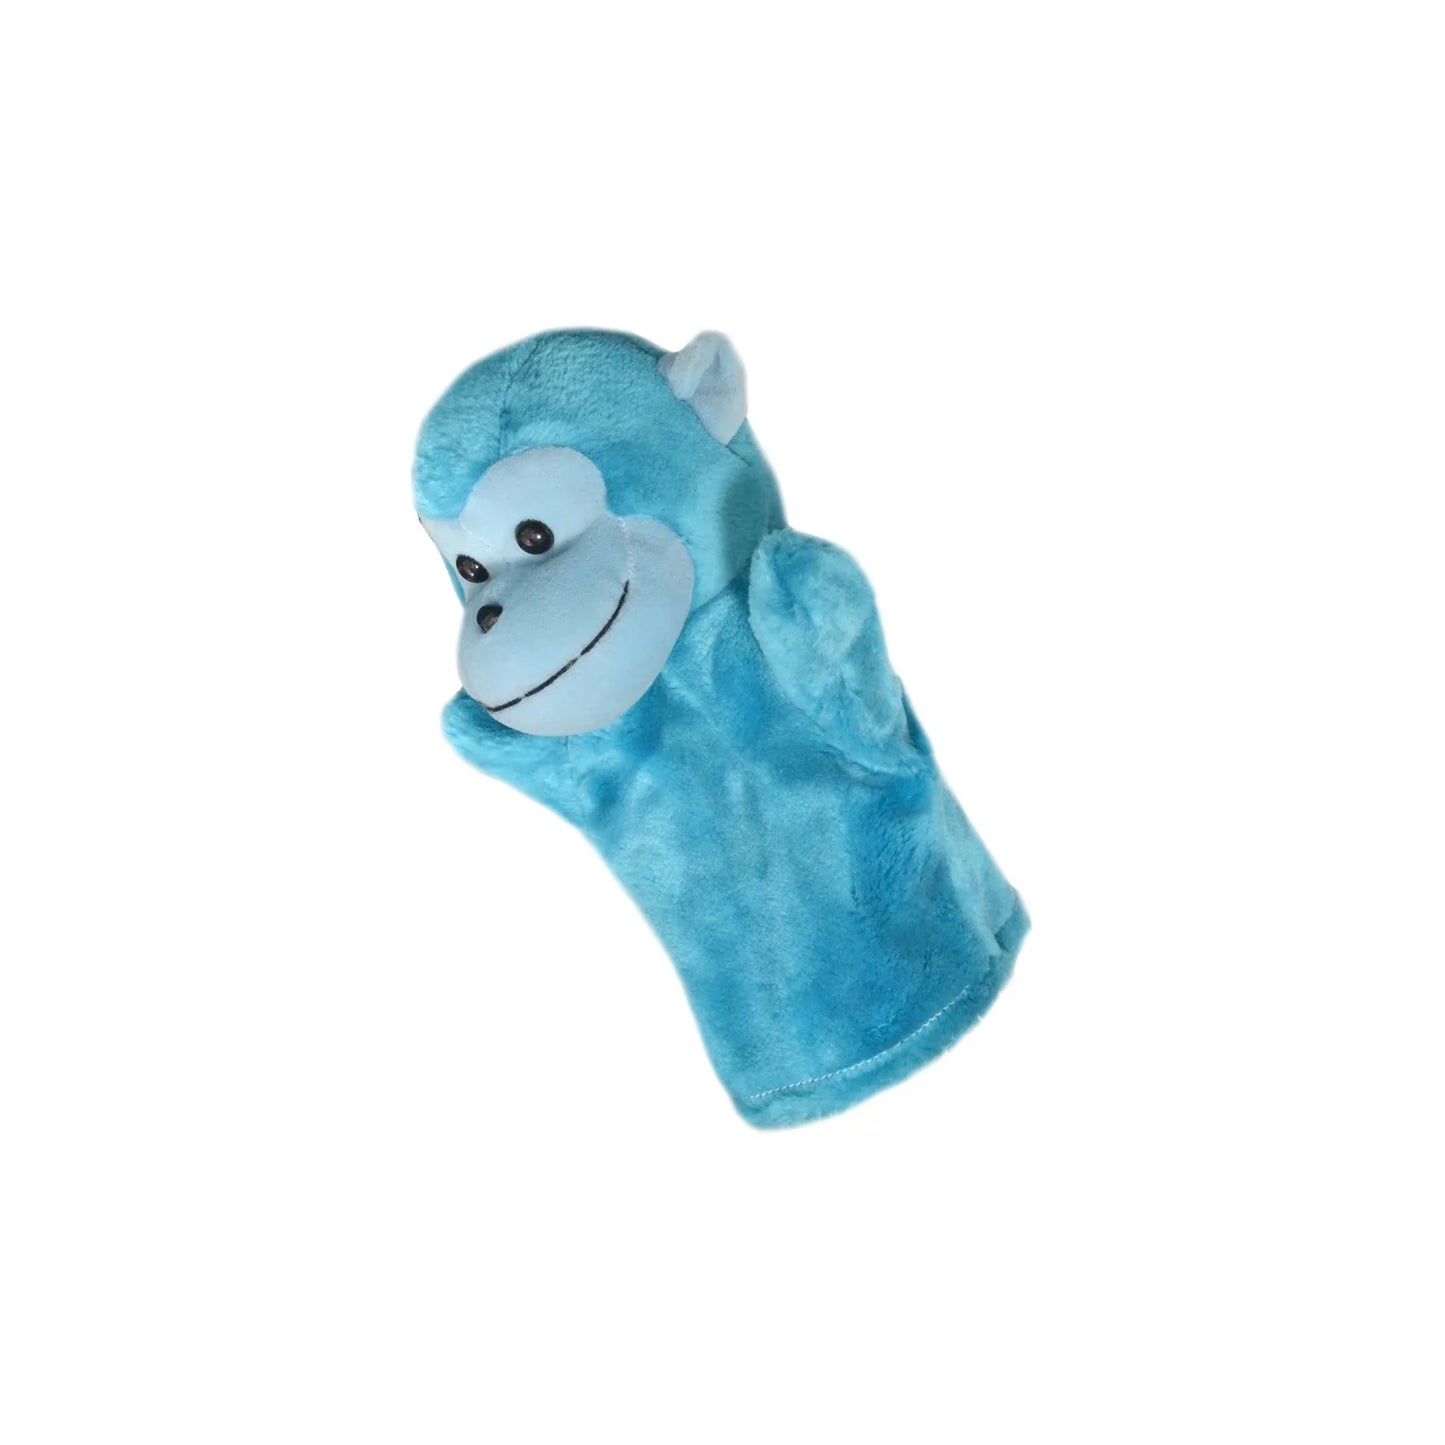 Monkey Hand Glove Puppet - Blue